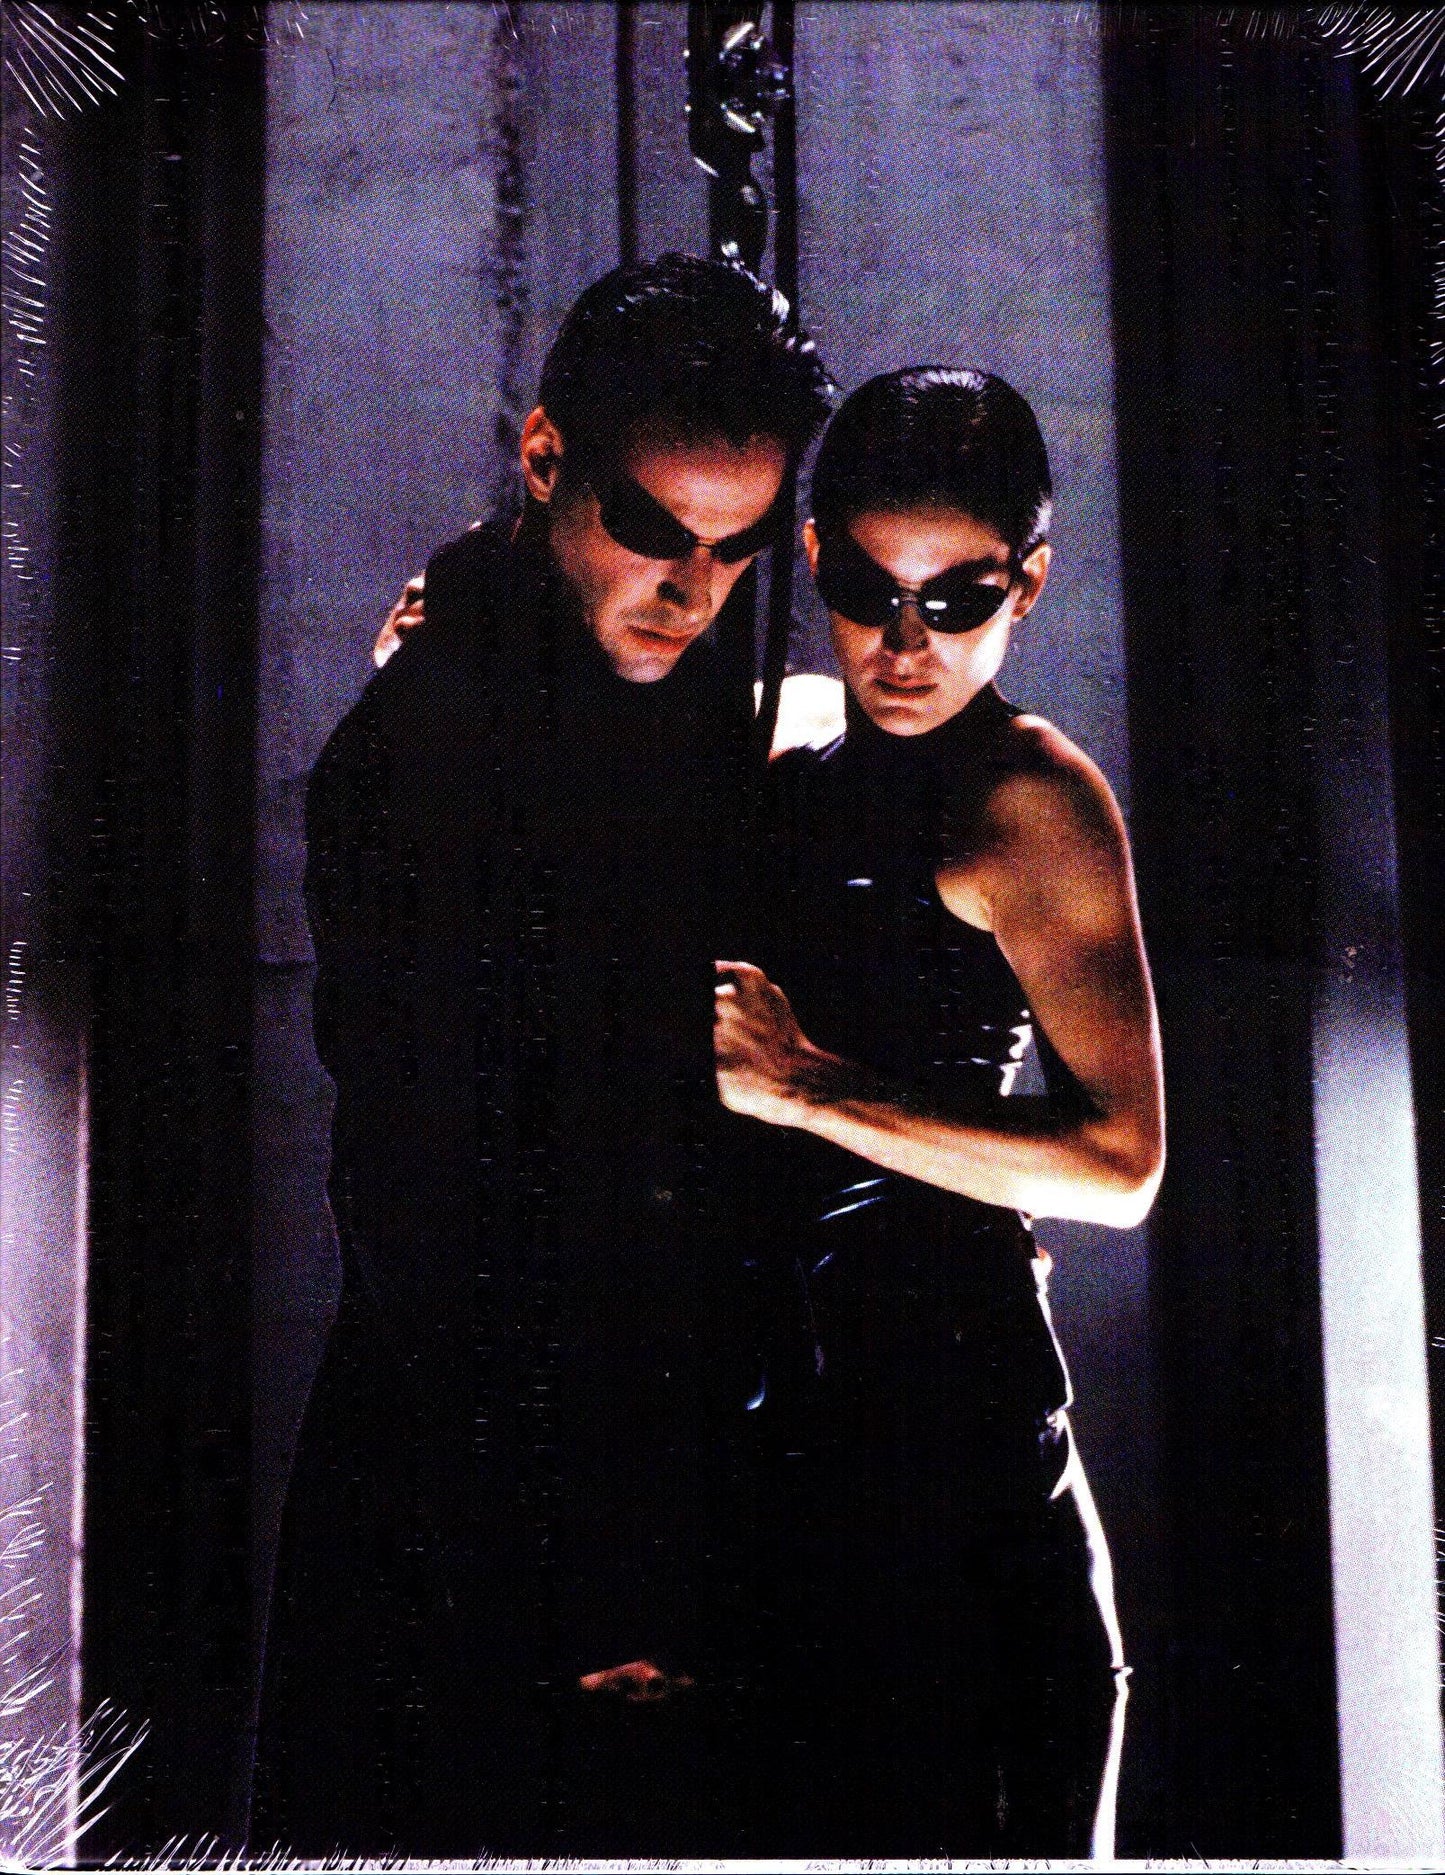 The Matrix 4K Full Slip SteelBook (1999)(ME#45)(Hong Kong)